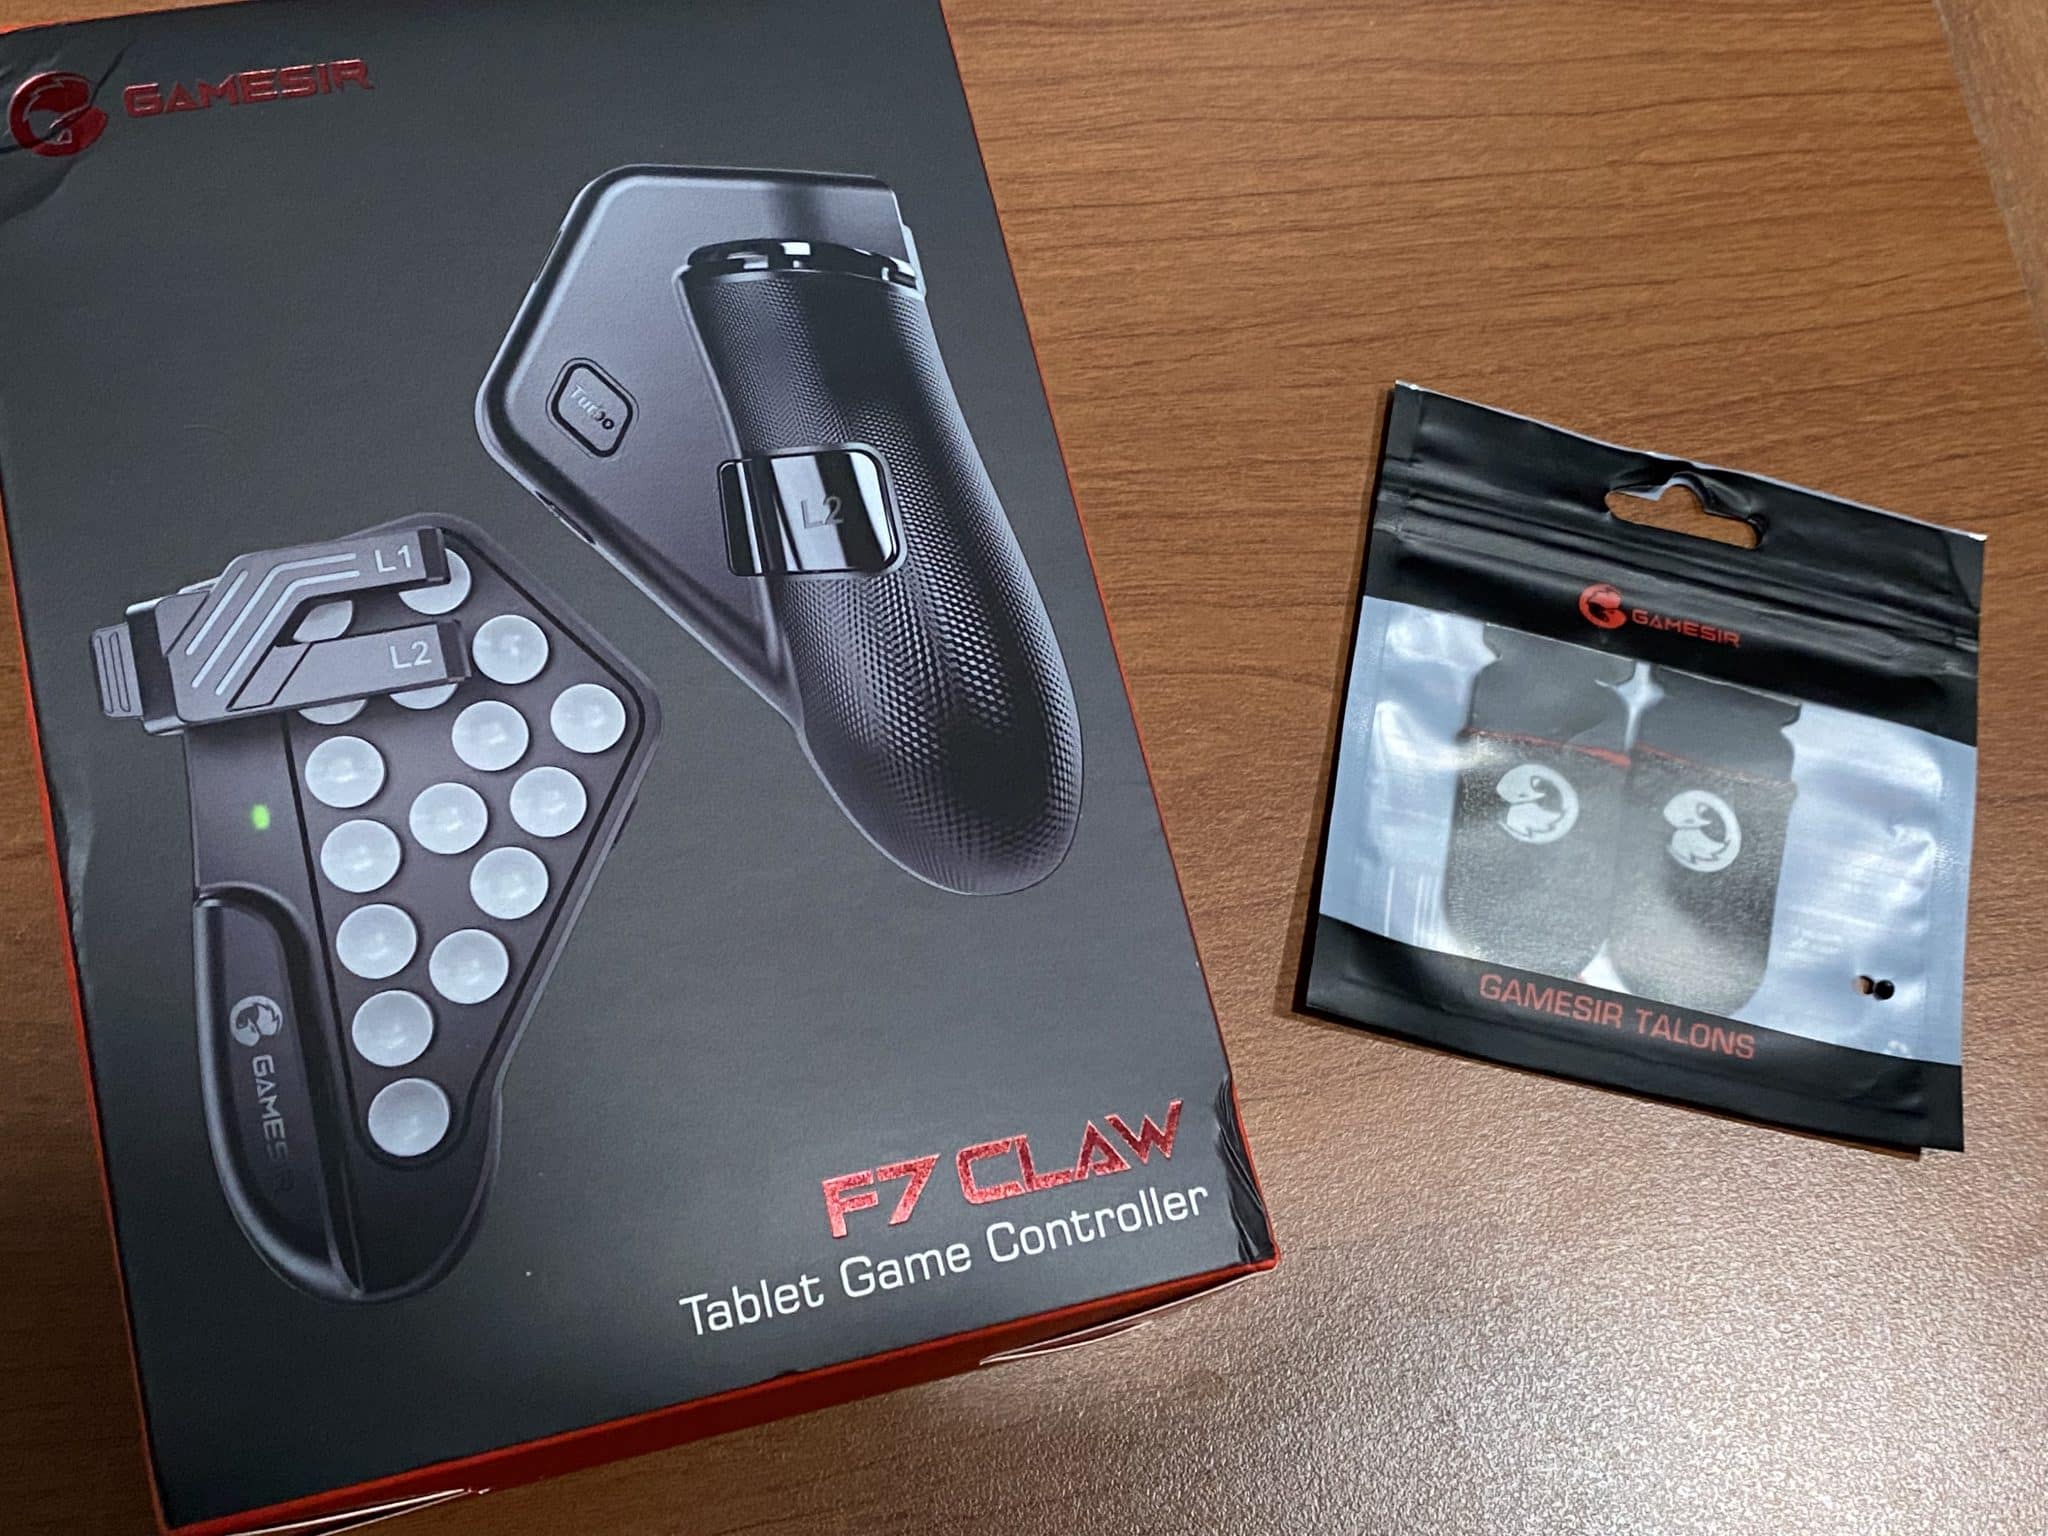 GameSir F7 Claw Controller per tablet e GameSir Talons Finger Sleeves: la recensione 12